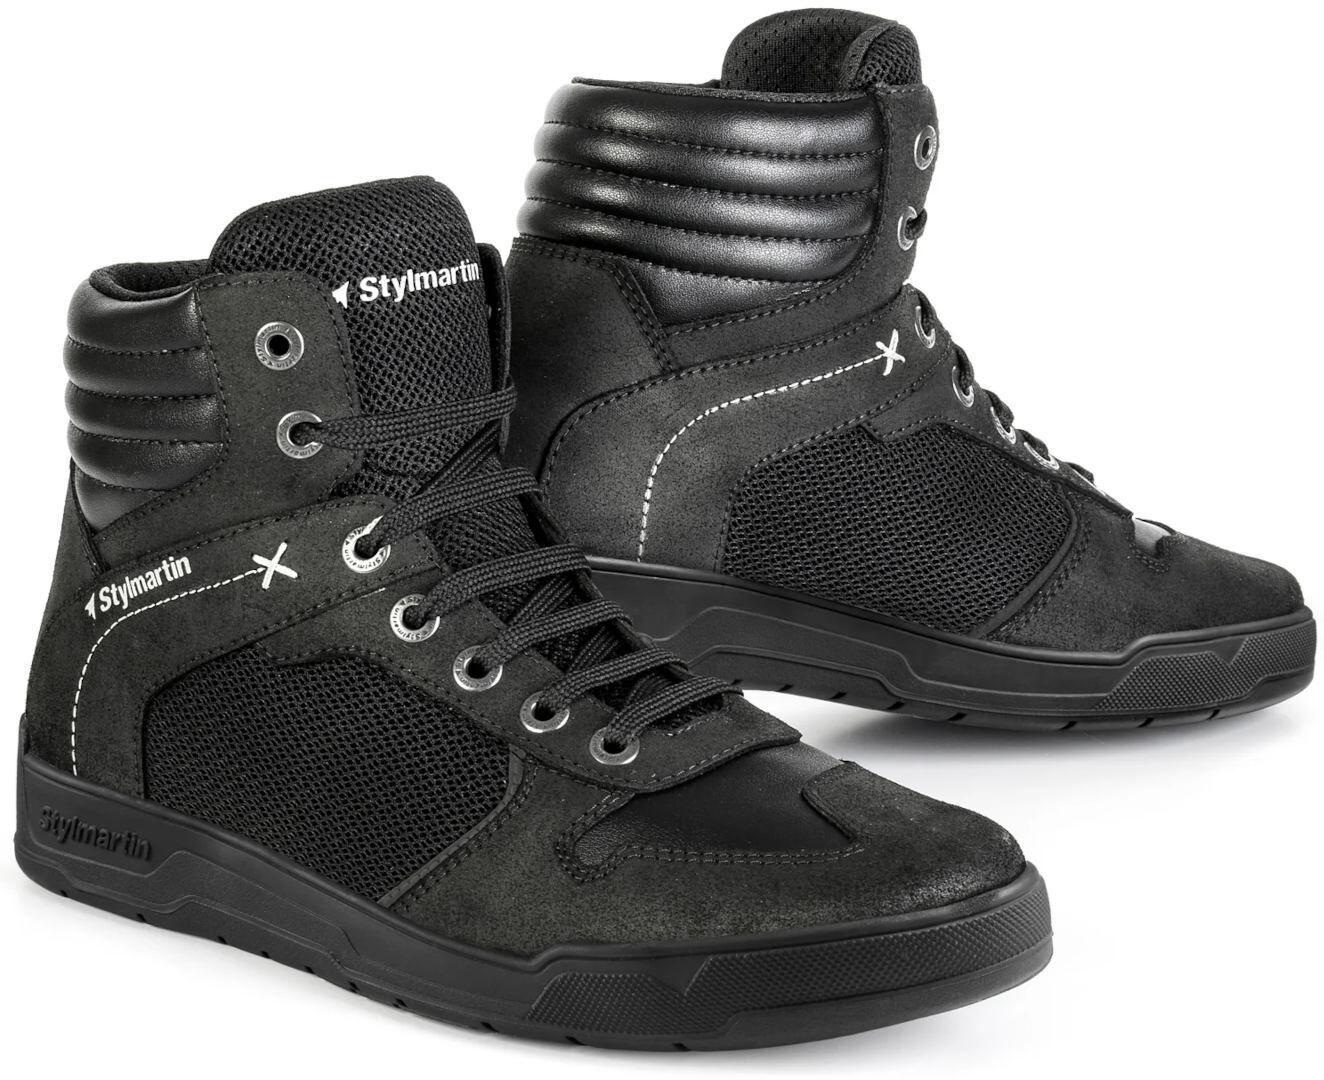 Stylmartin Atom Evo Zapatos de moto - Negro (41)